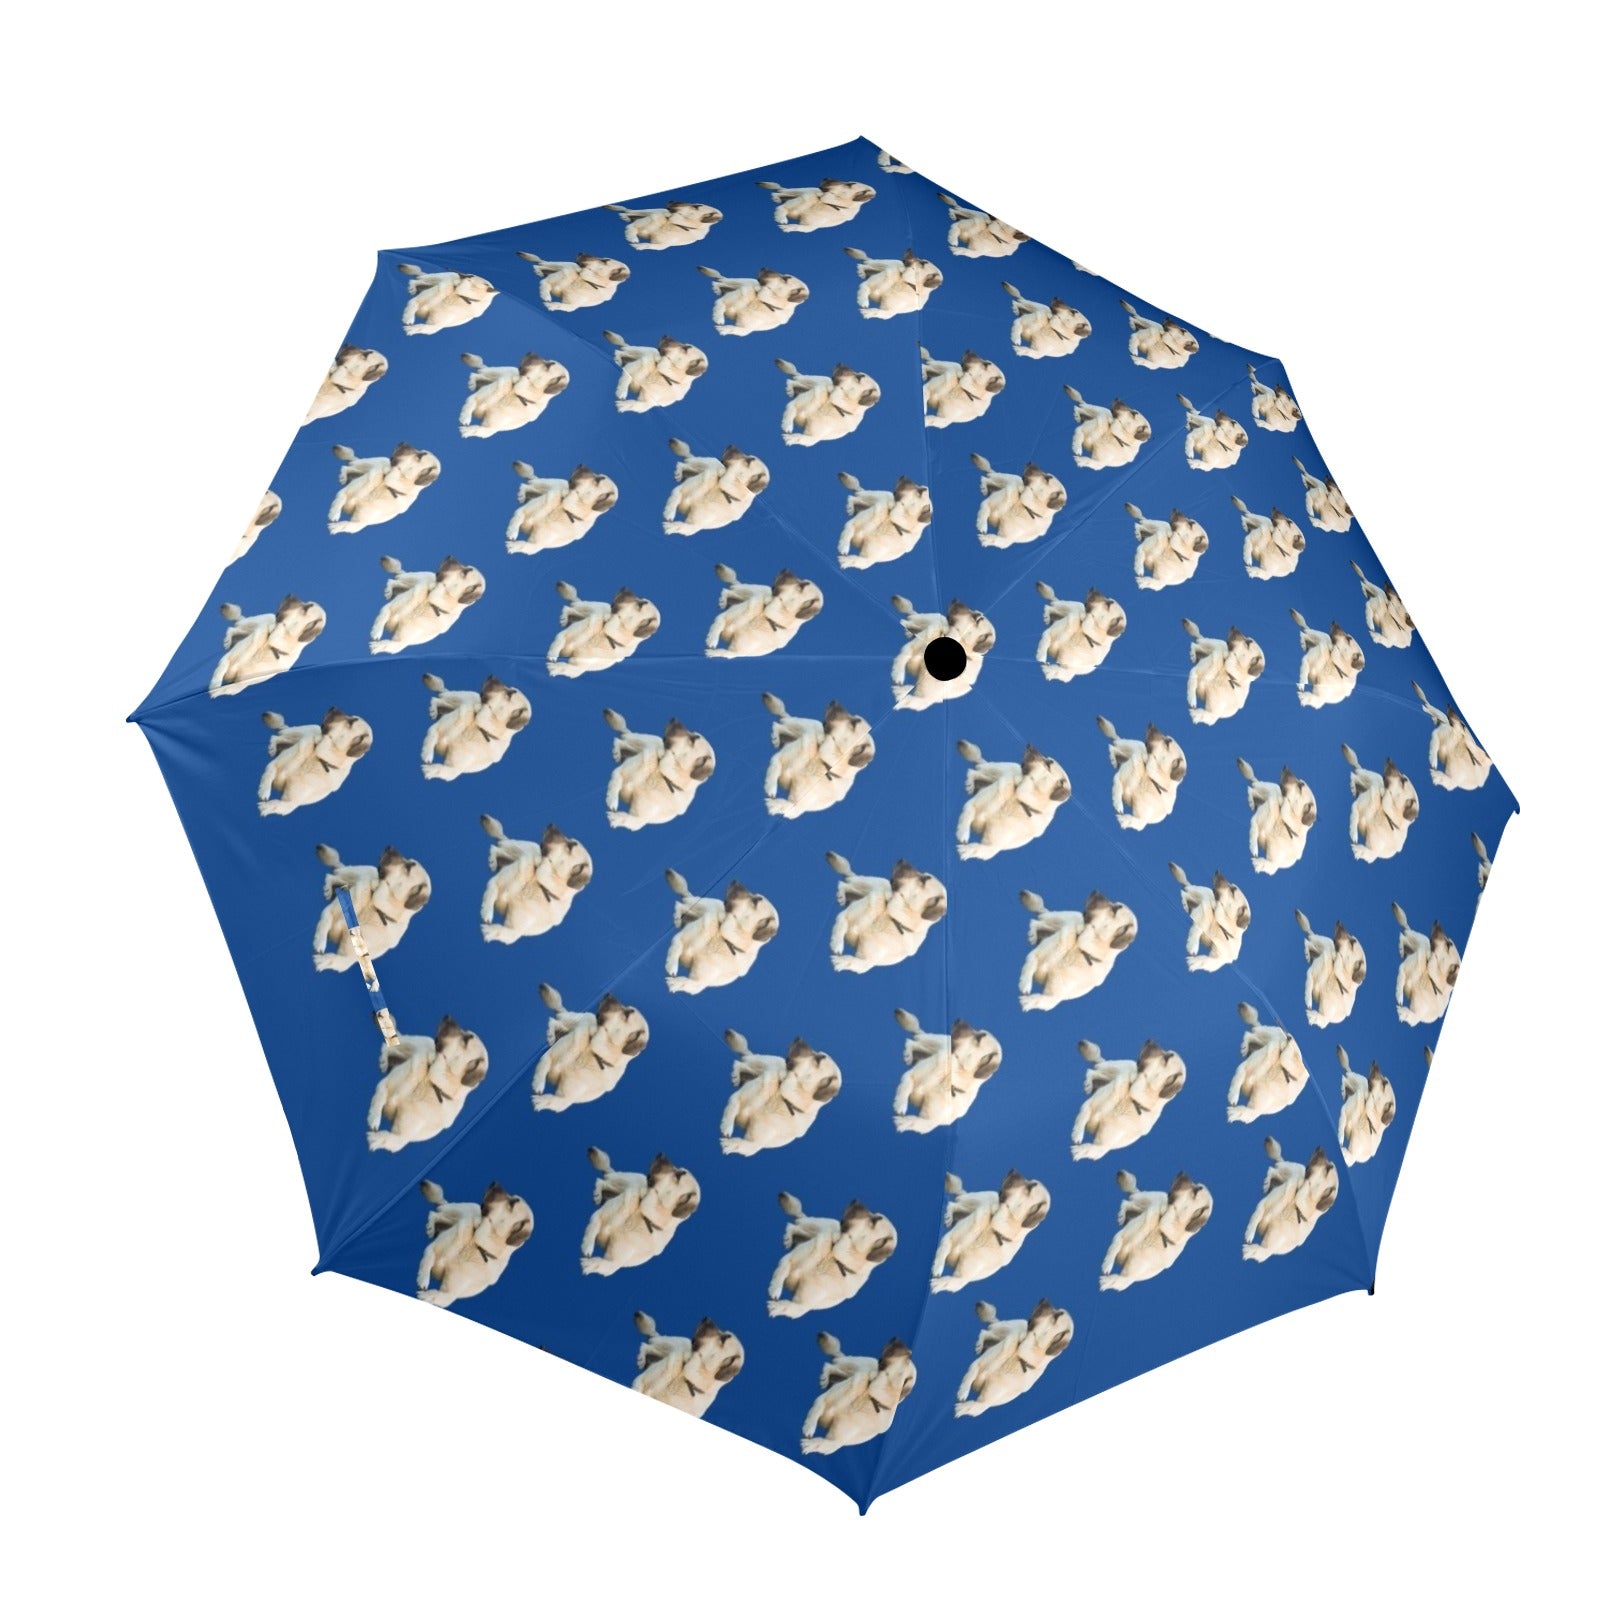 Anatolian Shepherd Umbrella - Blue